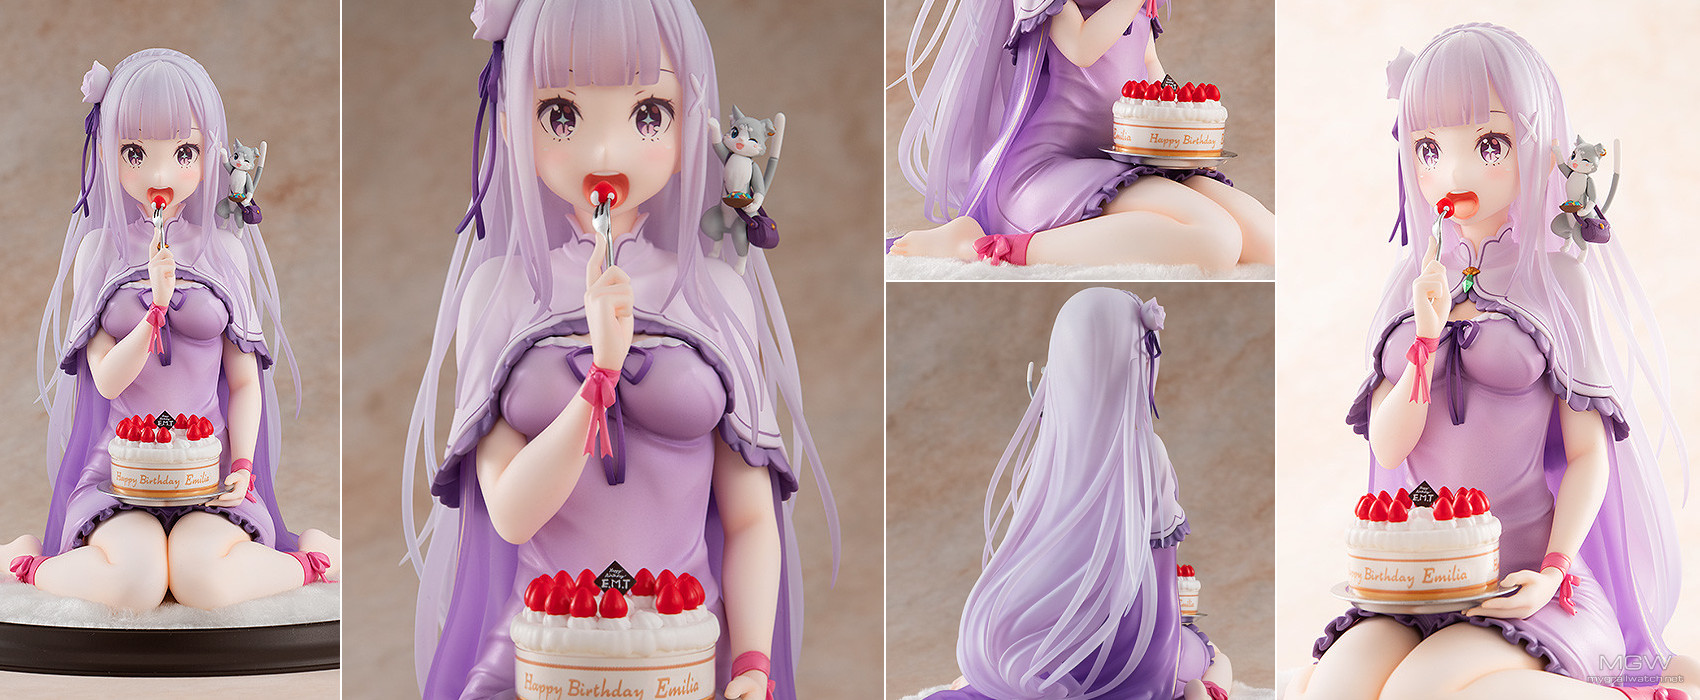 Emilia Birthday Cake Ver. by KADOKAWA from Re:ZERO - Starting Life in Another World -